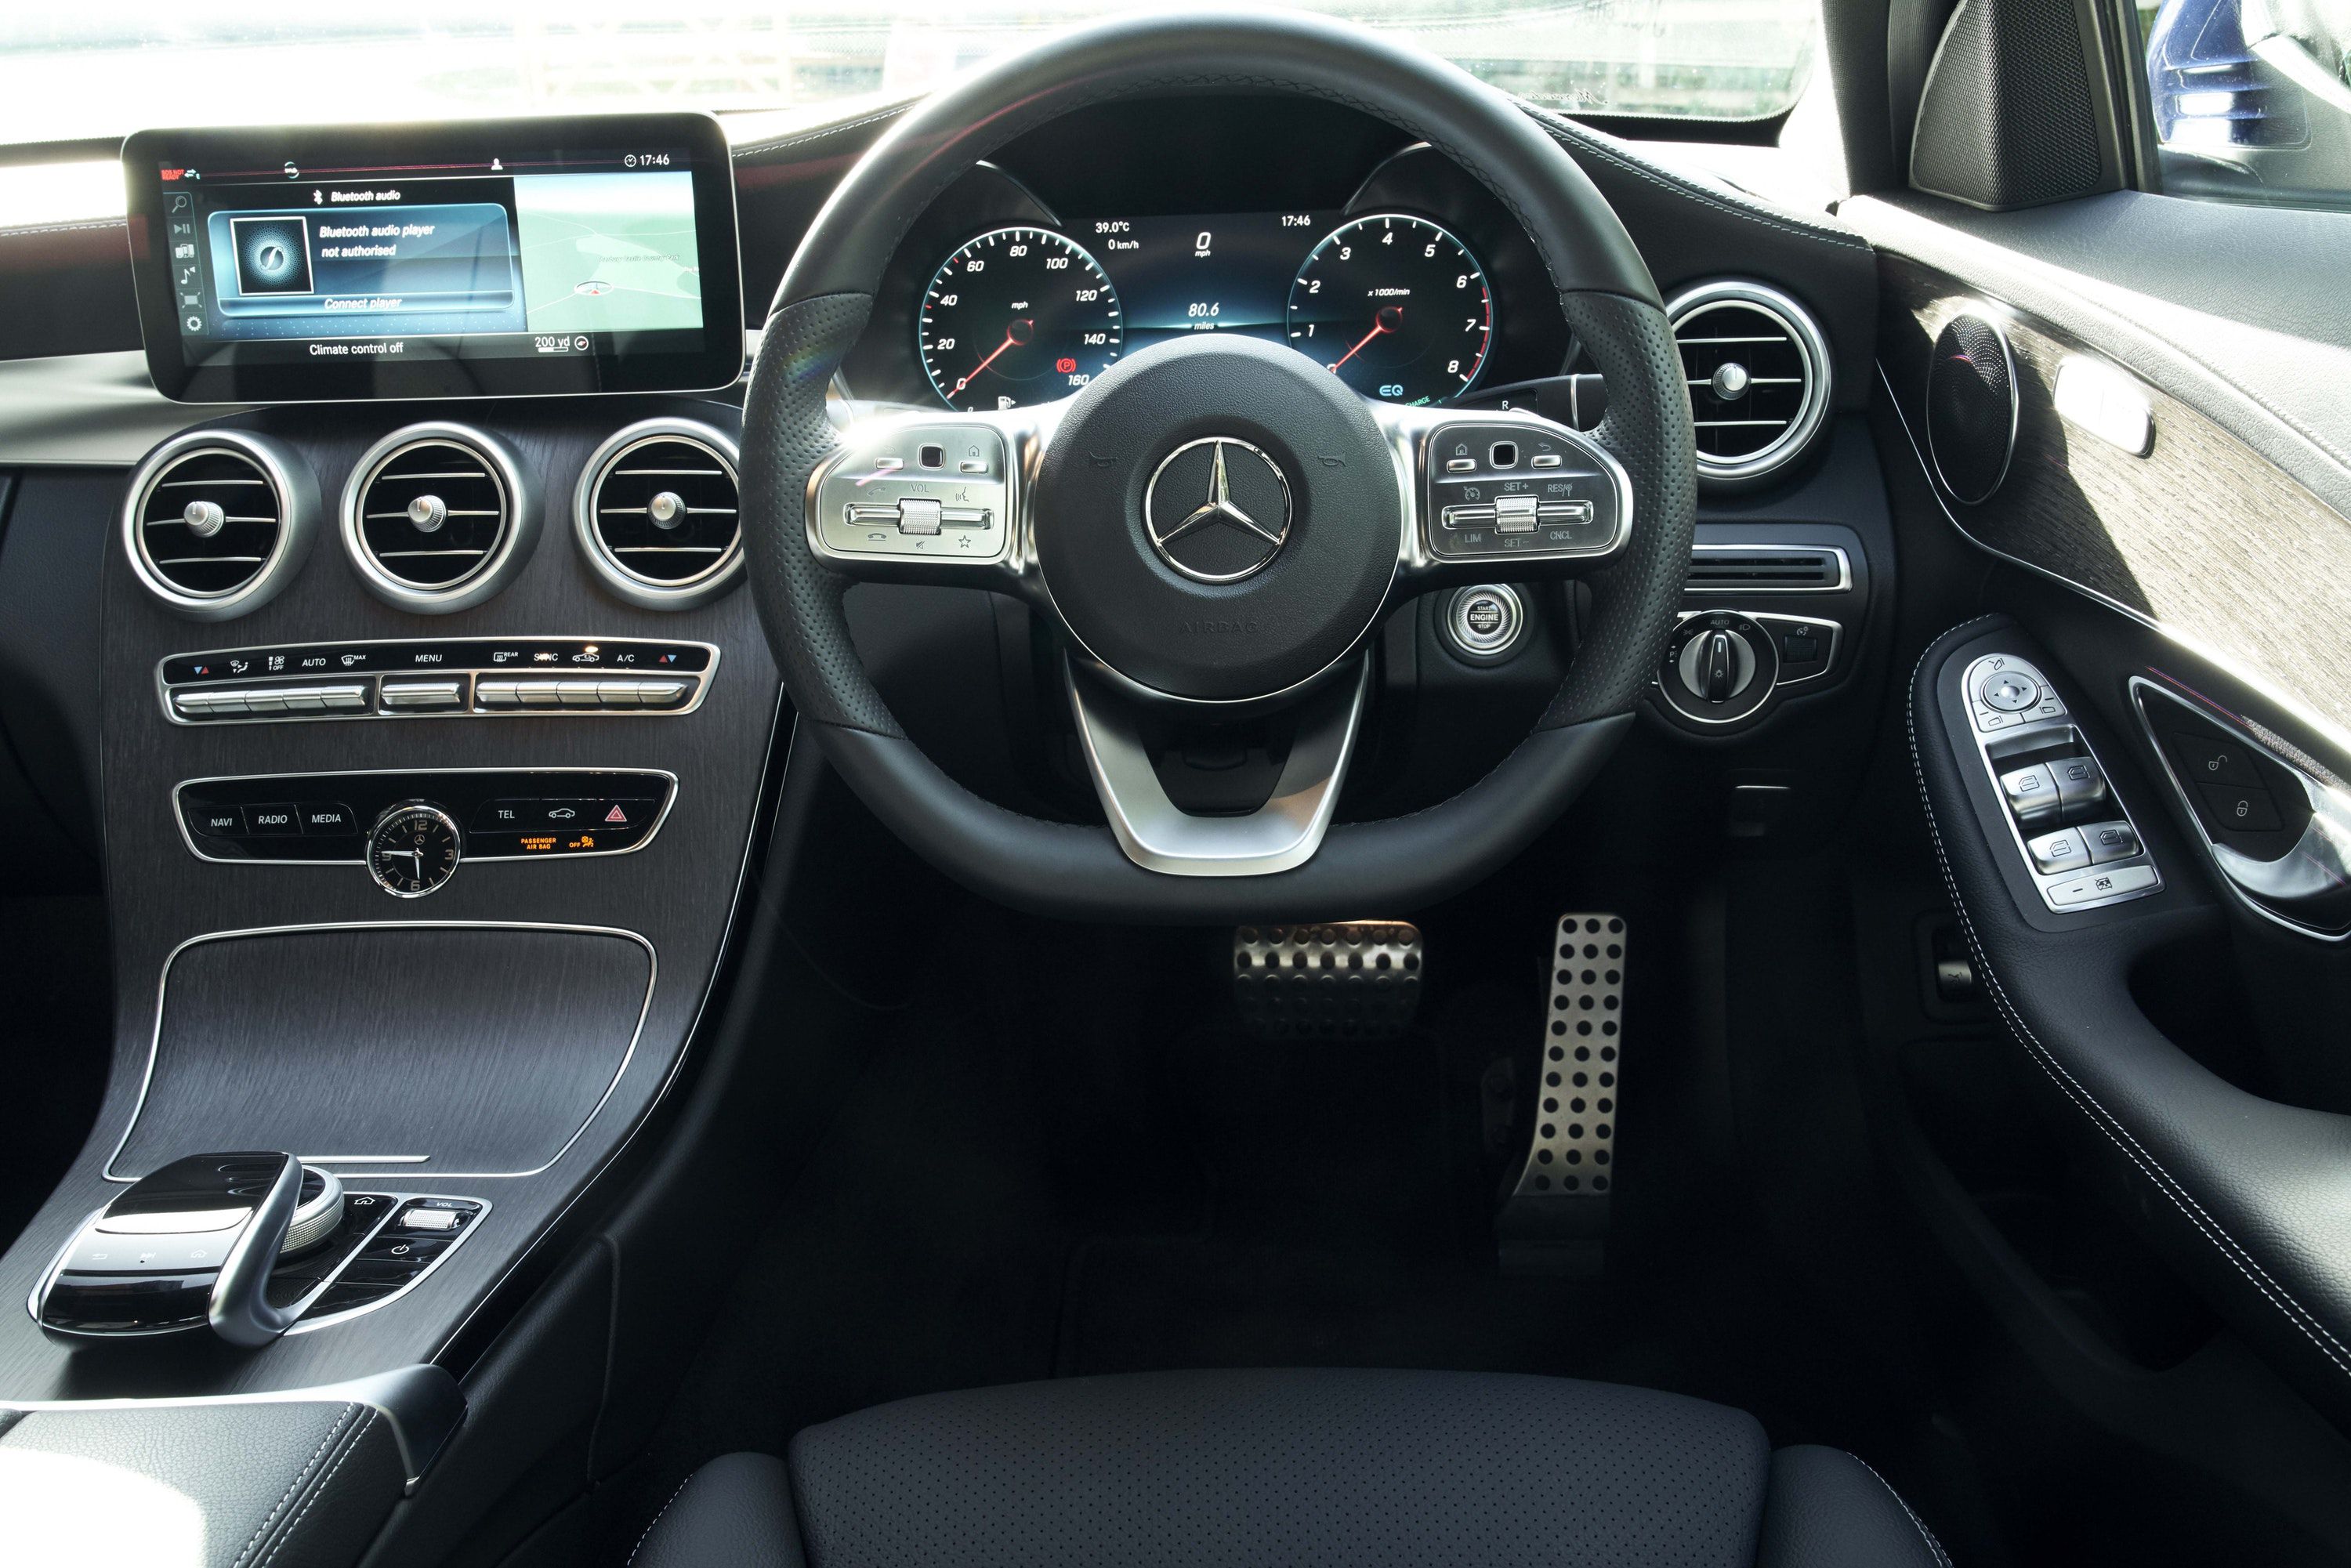 The Interior of Mercedes-Benz C-Class